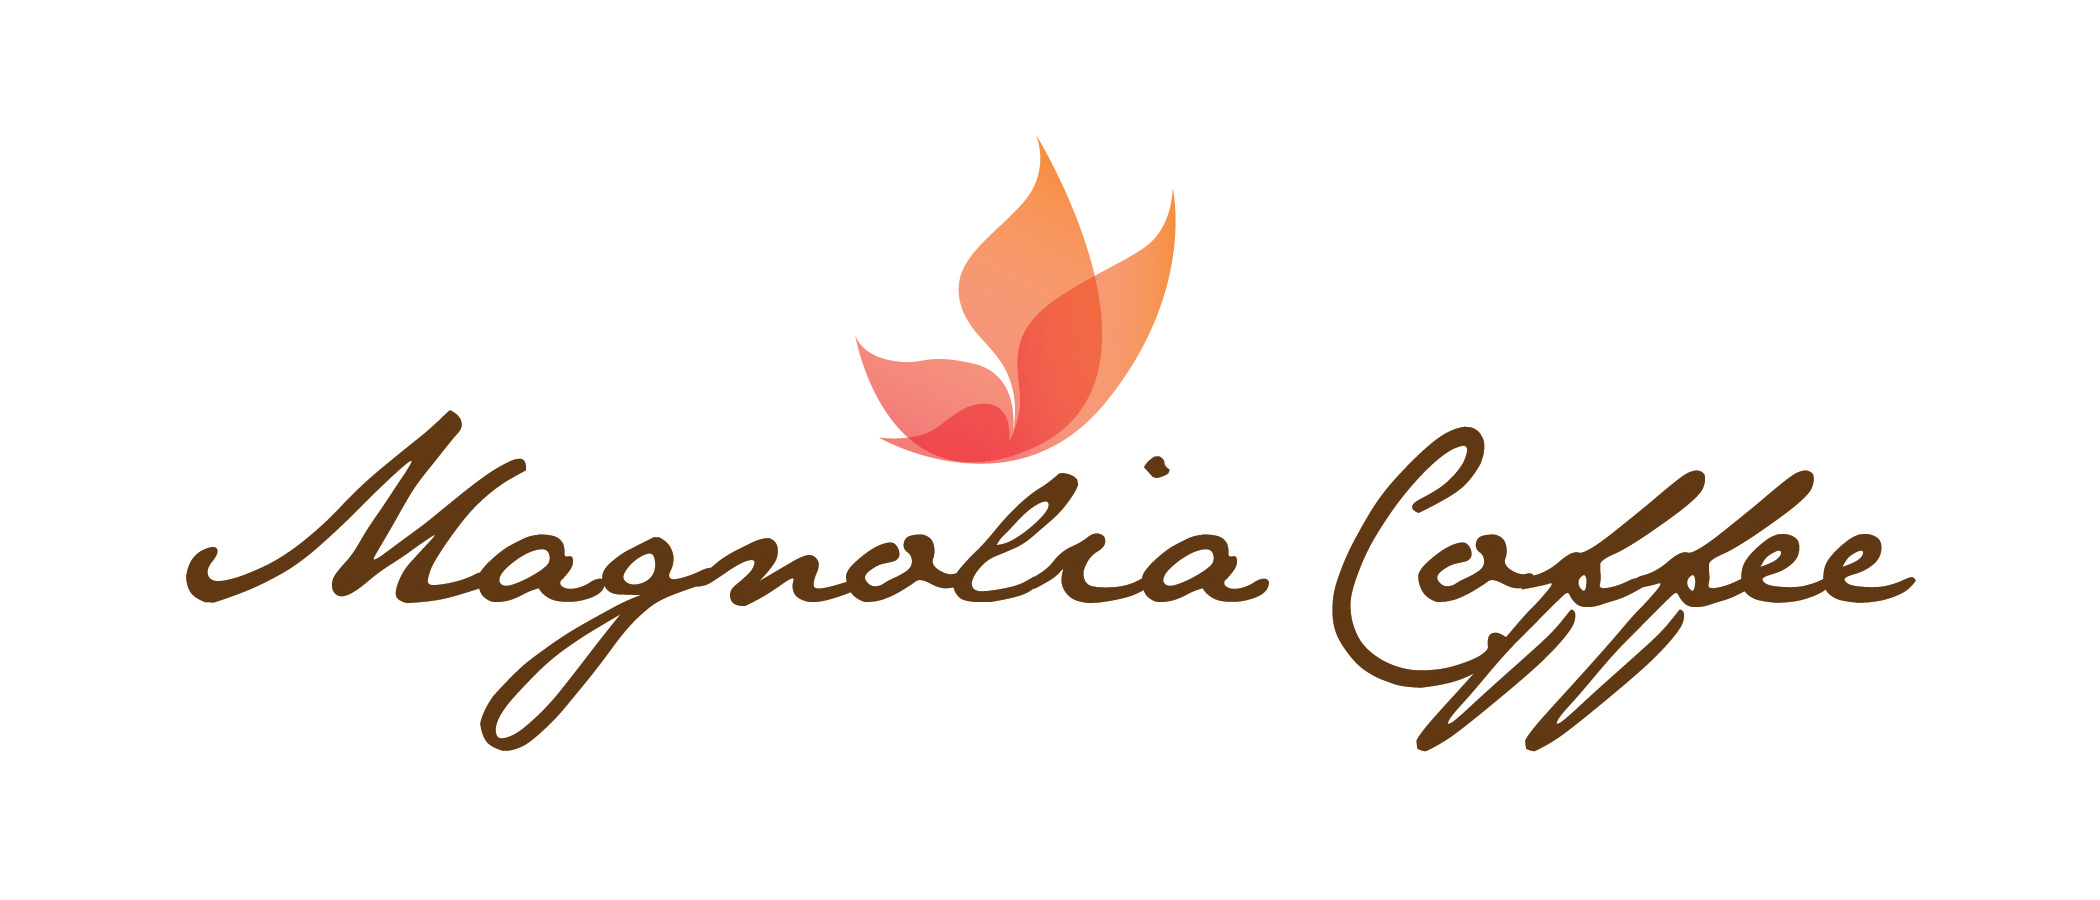 Magnolia Coffee Company